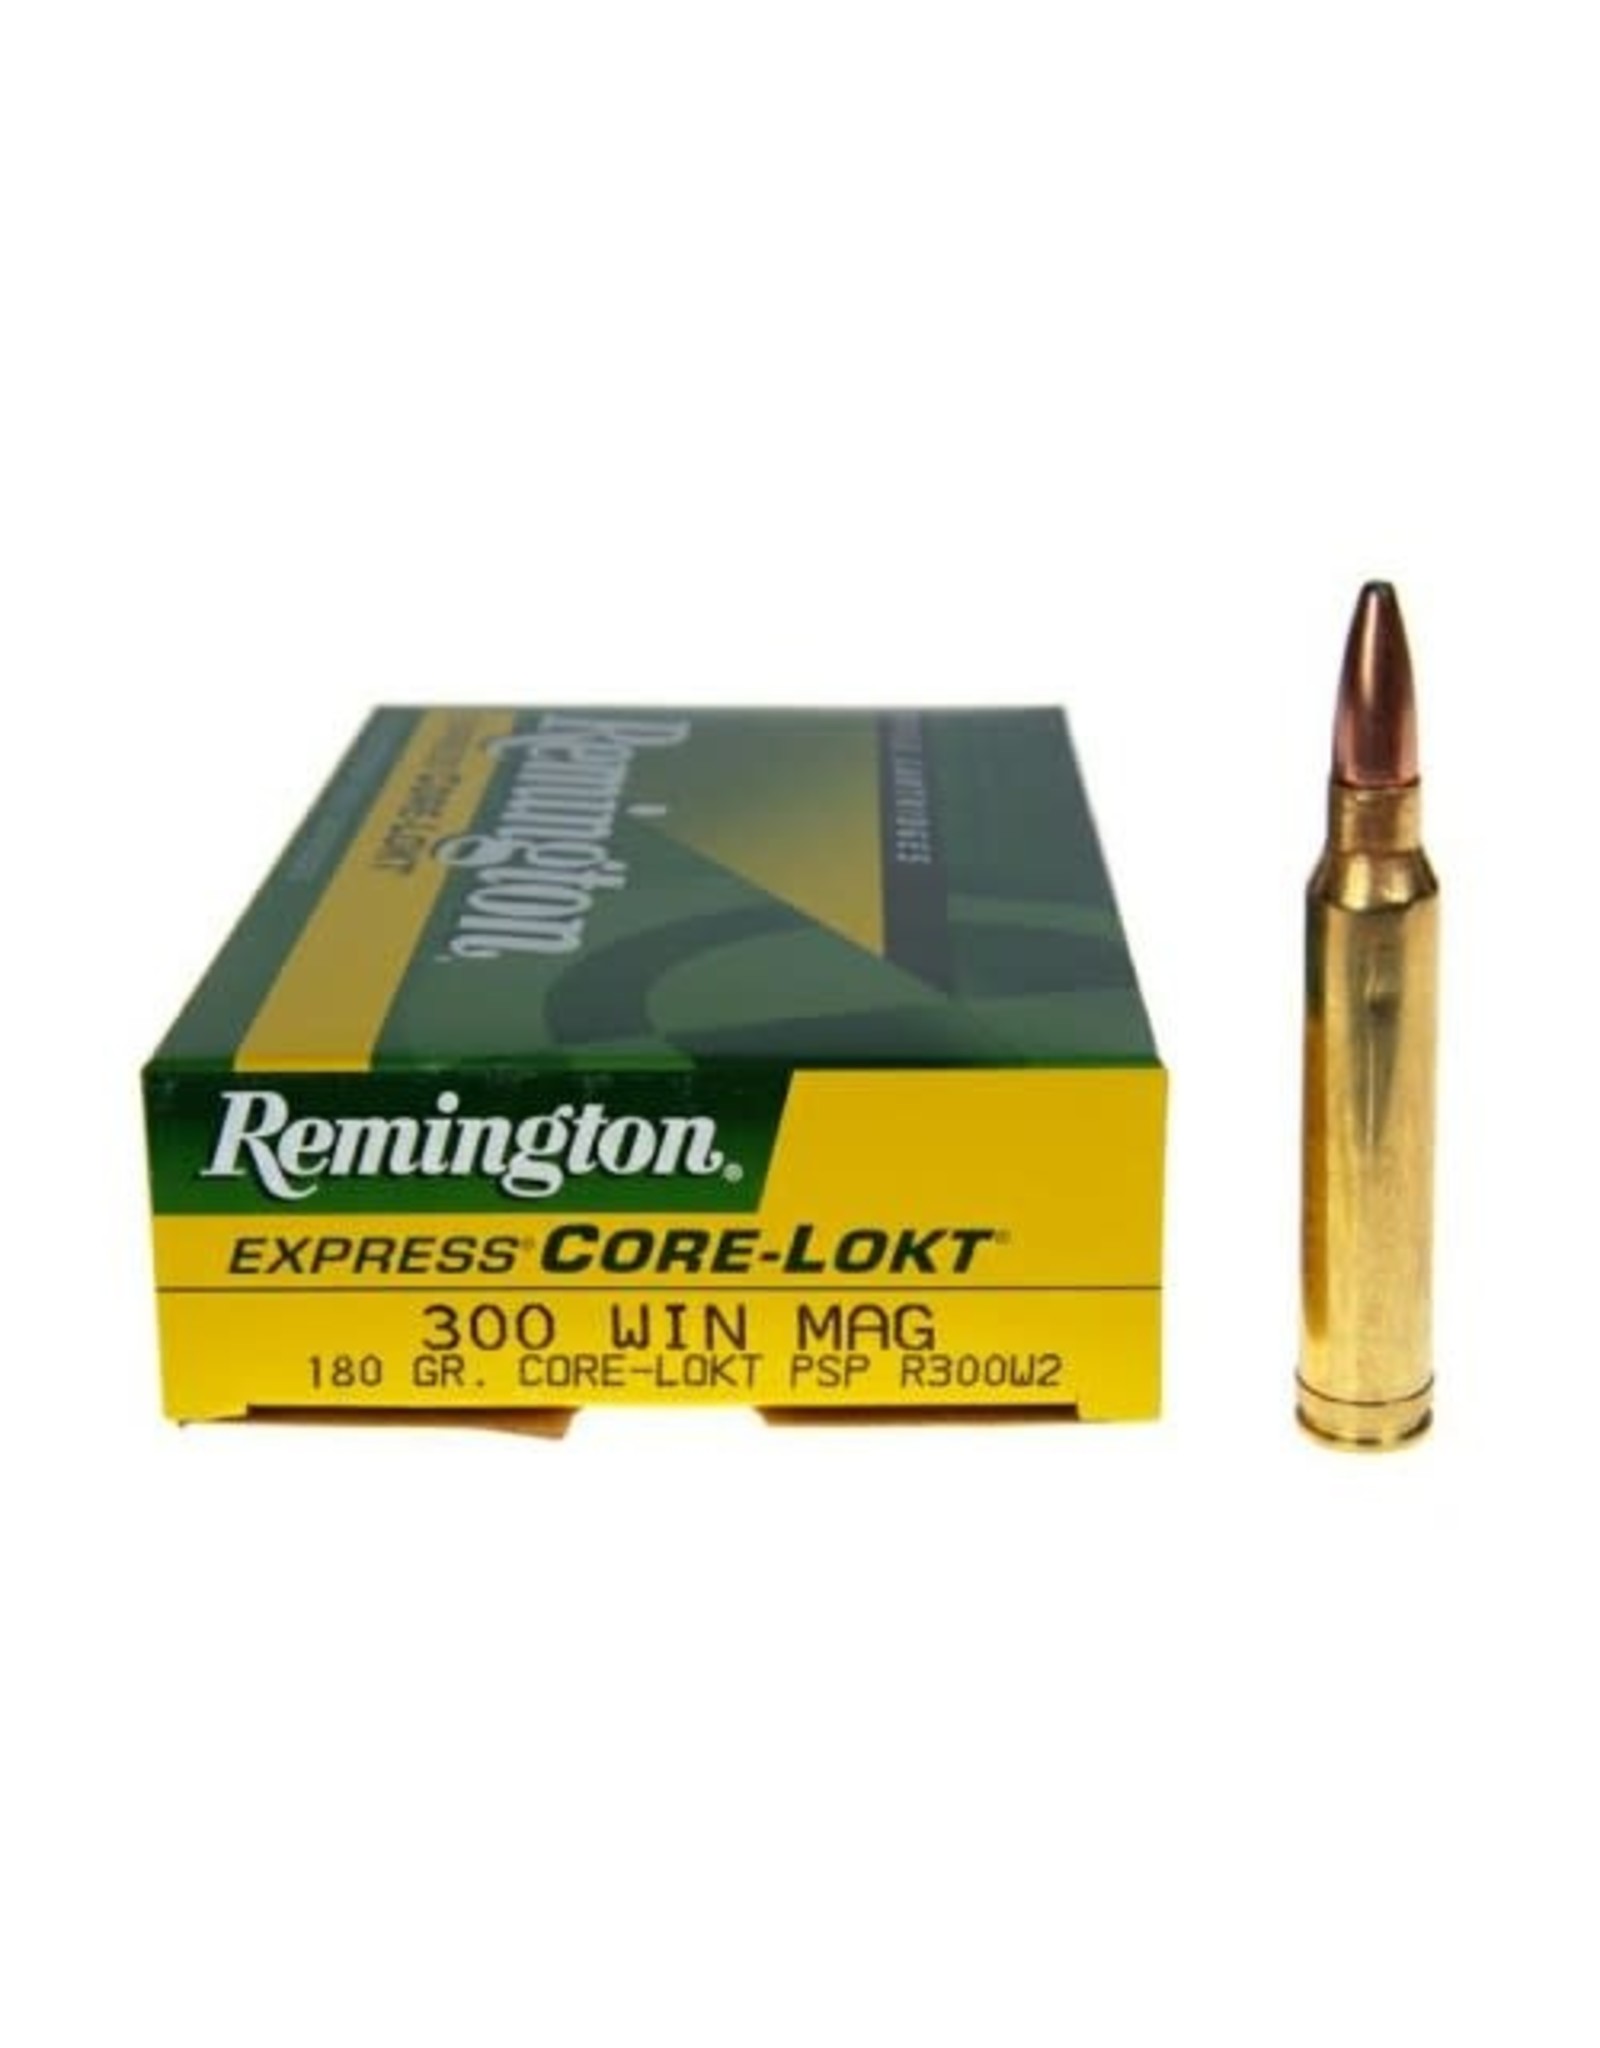 Remington Remington R300W2 Core-Lokt Rifle Ammo 300 WIN MAG, PSP, 180 Grains, 2960 fps, 20, Boxed